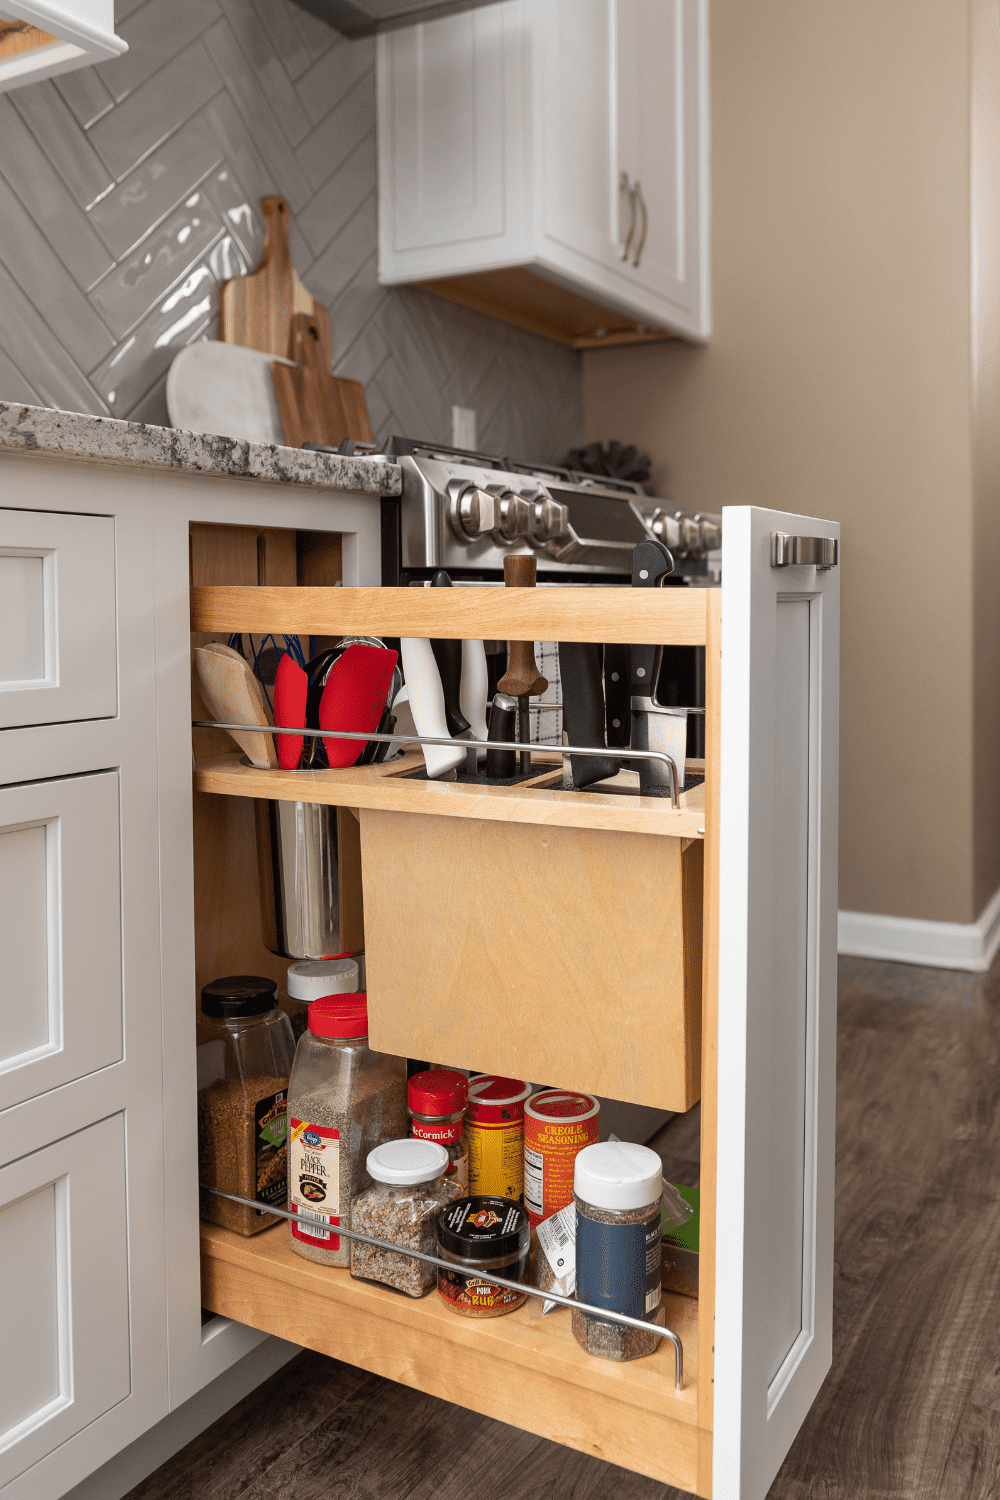 Nicholas Design Build | A versatile kitchen with a pull out spice rack.